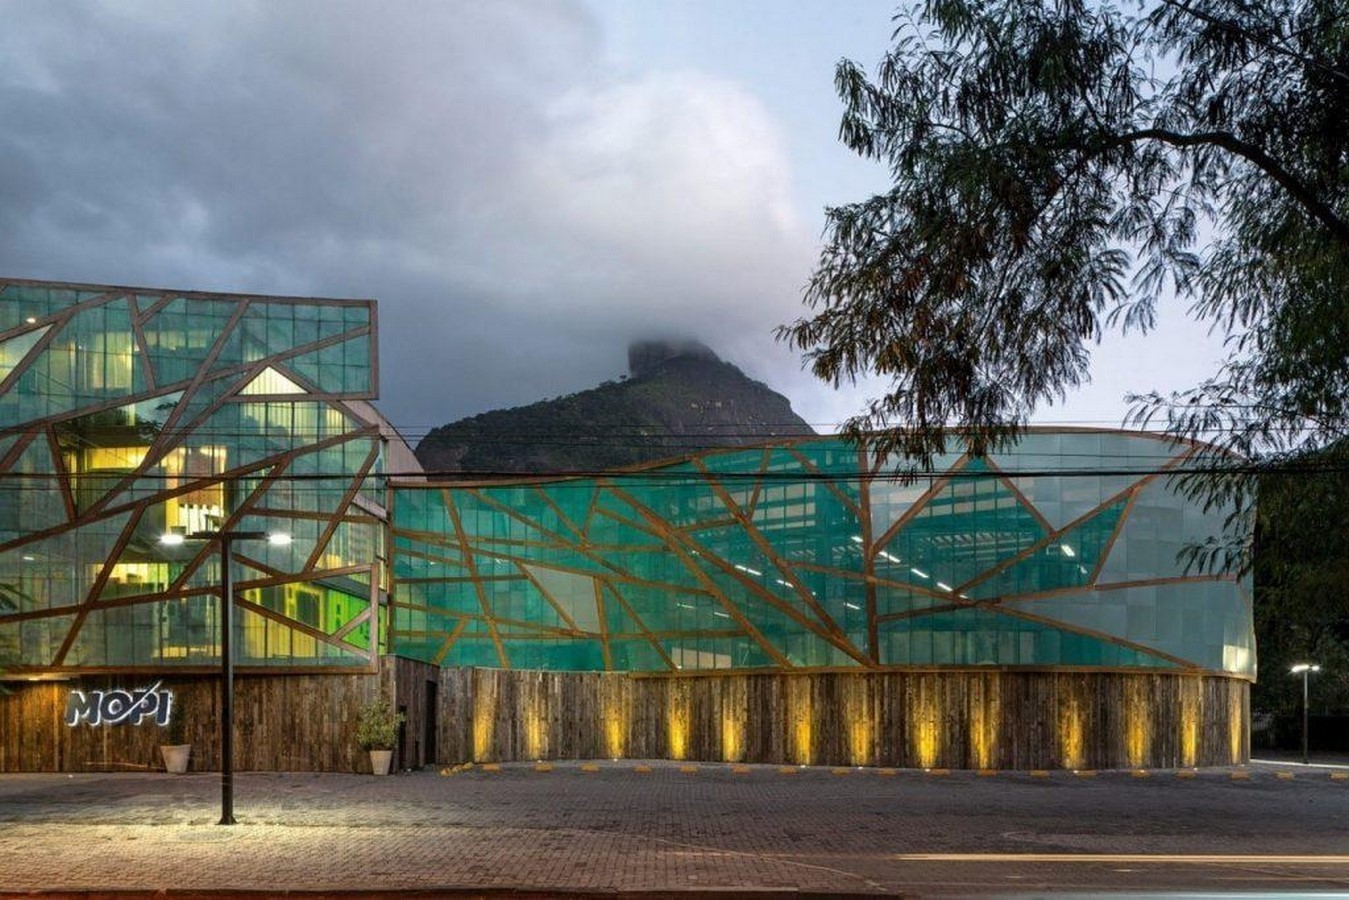 Mareines Arquitetura | Las mejores firmas de arquitectura / arquitectos en Río de Janeiro